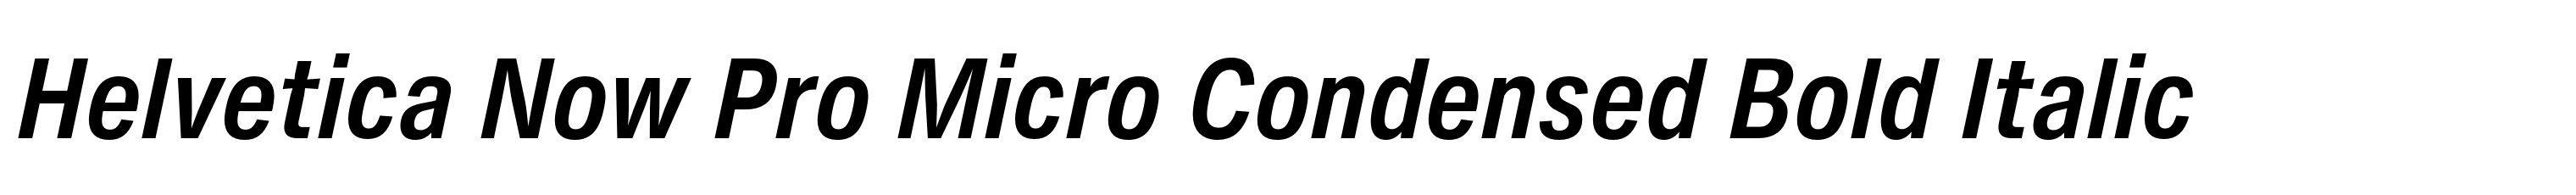 Helvetica Now Pro Micro Condensed Bold Italic